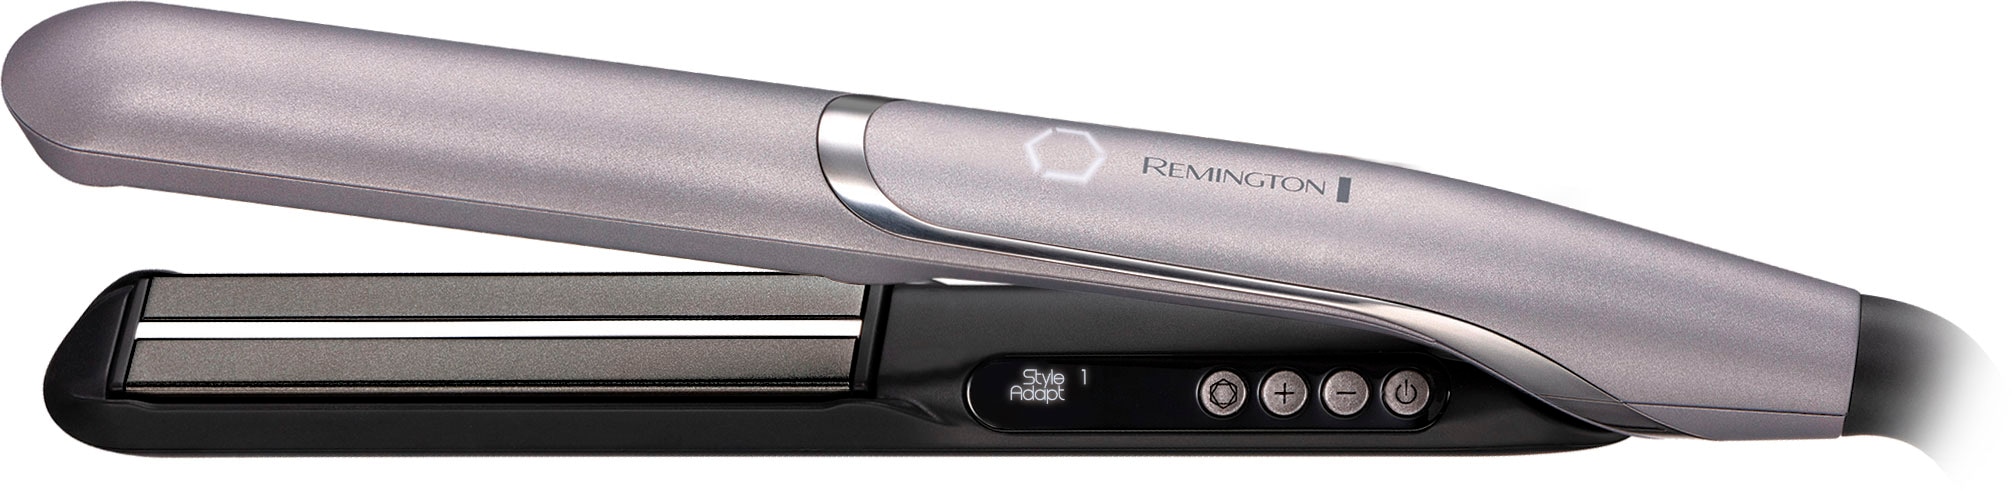 Remington Glätteisen »PROluxe You™ jetzt 2 Keramik-Beschichtung, bei S9880«, StyleAdapt™ lernfähiger Nutzerprofile Funktion, Haarglätter, kaufen Memory OTTO